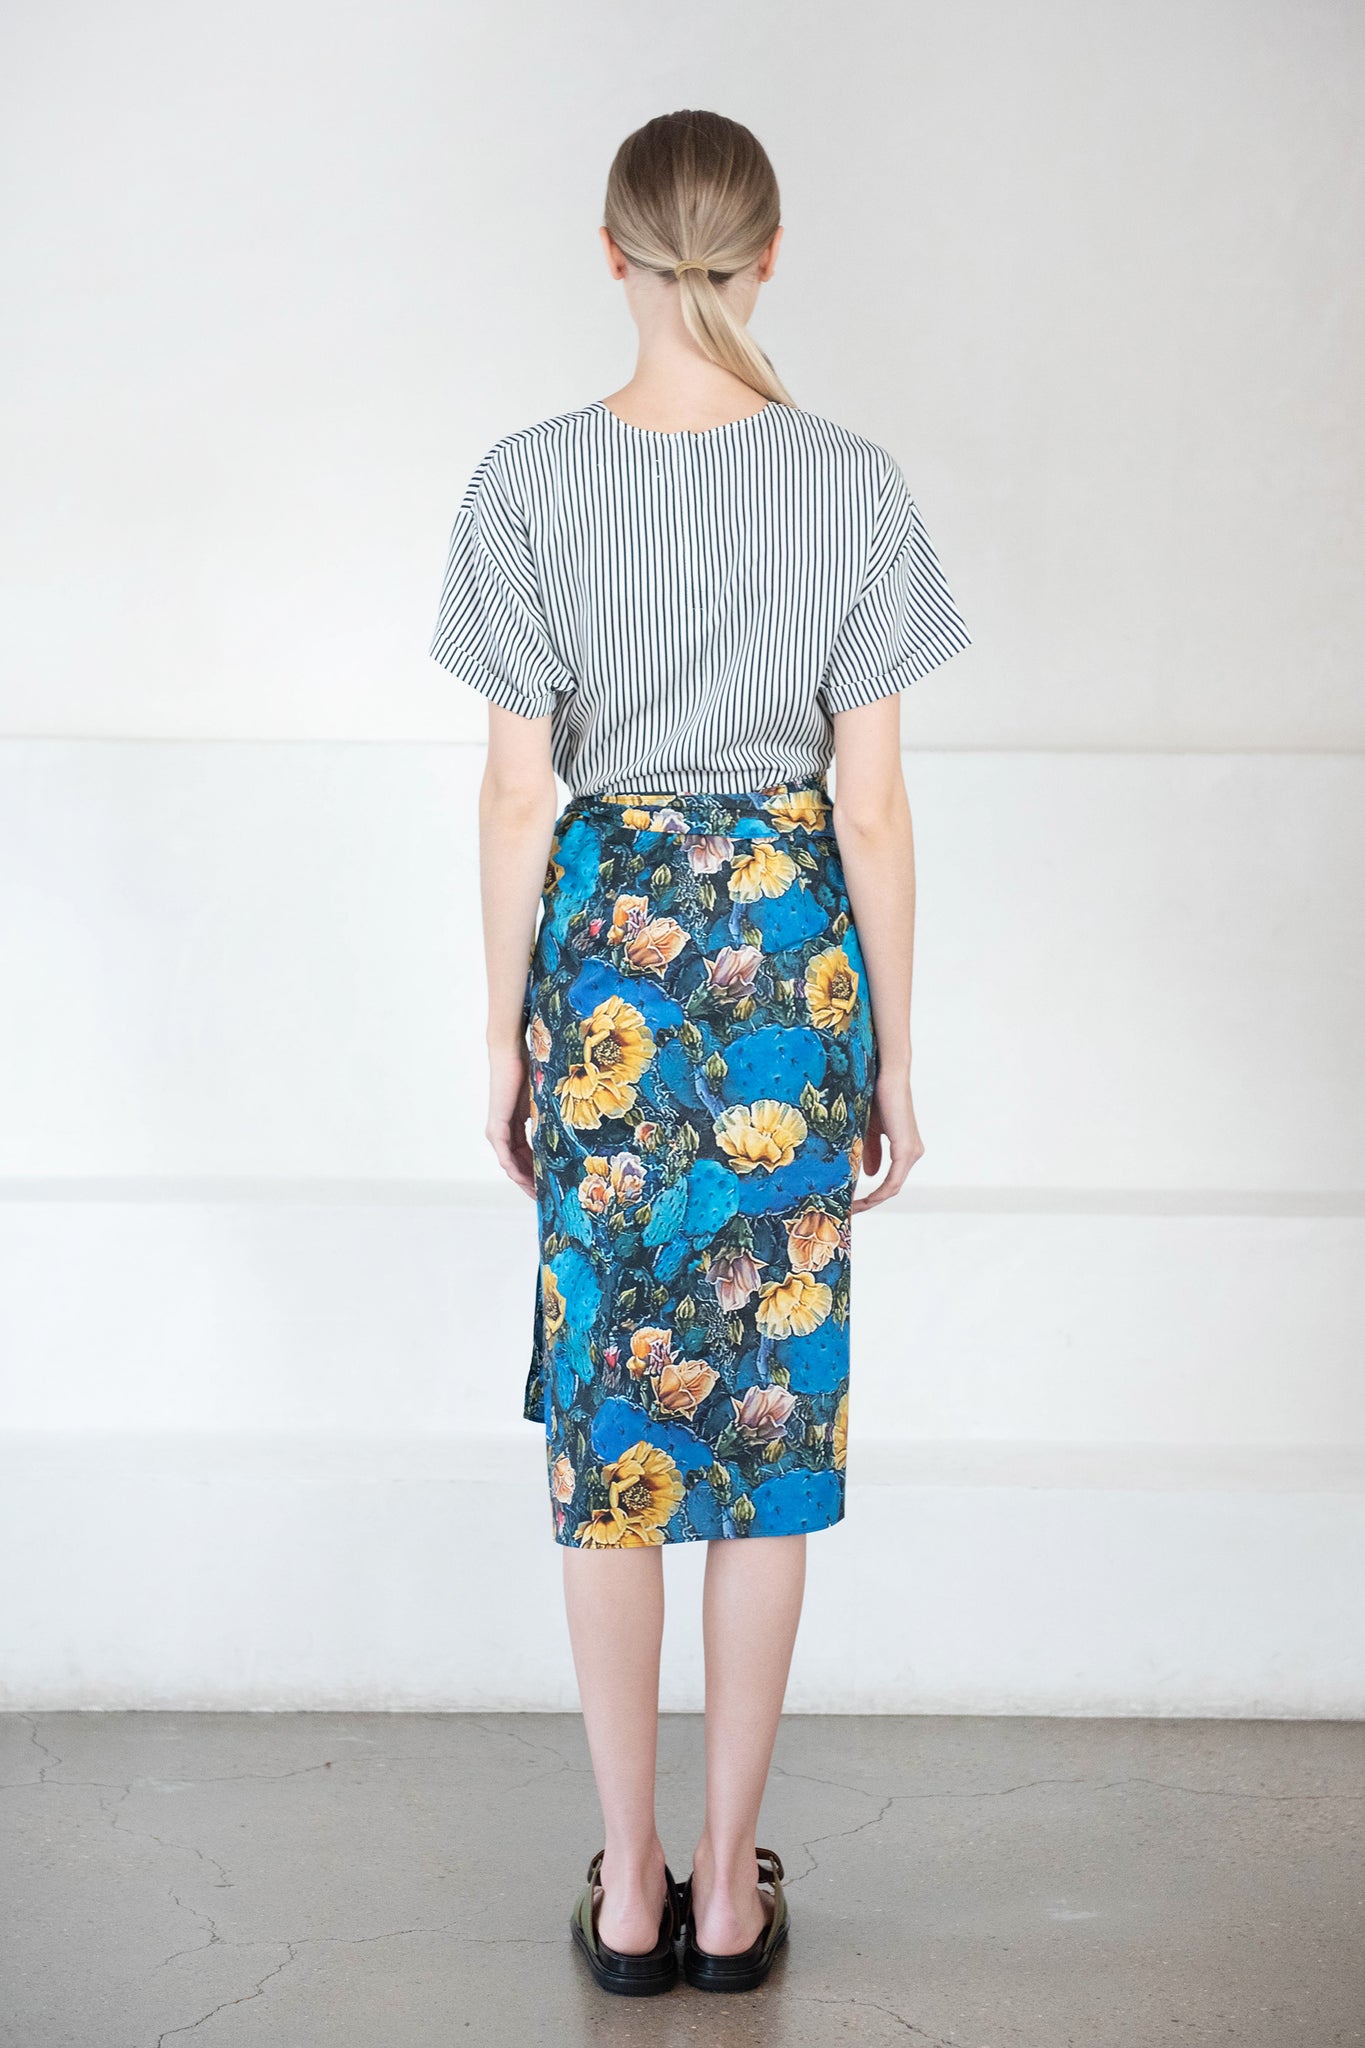 WJ MARTIN - Jill T-Shirt Dress, Mixed Print